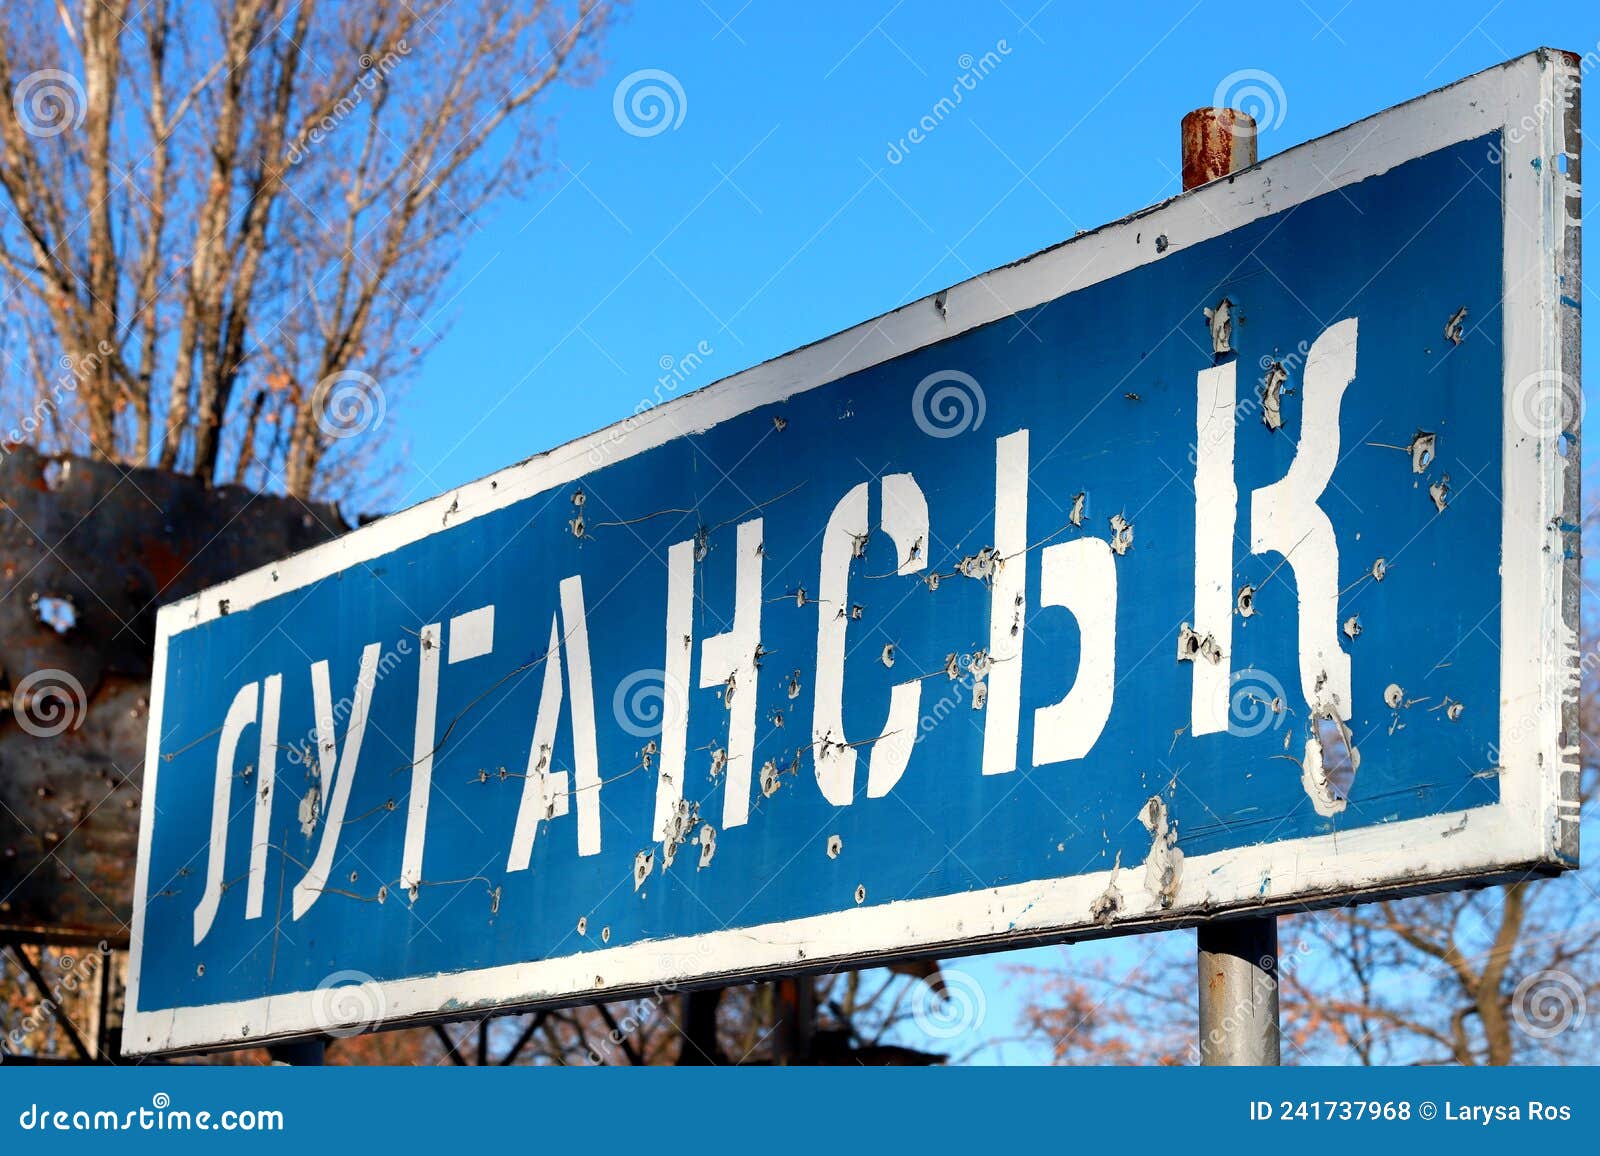 ukraine russia war road sign in ukrainian - lugansk, pierced by bullets, ukrainian war in donbass destruction, ukraine border, ato